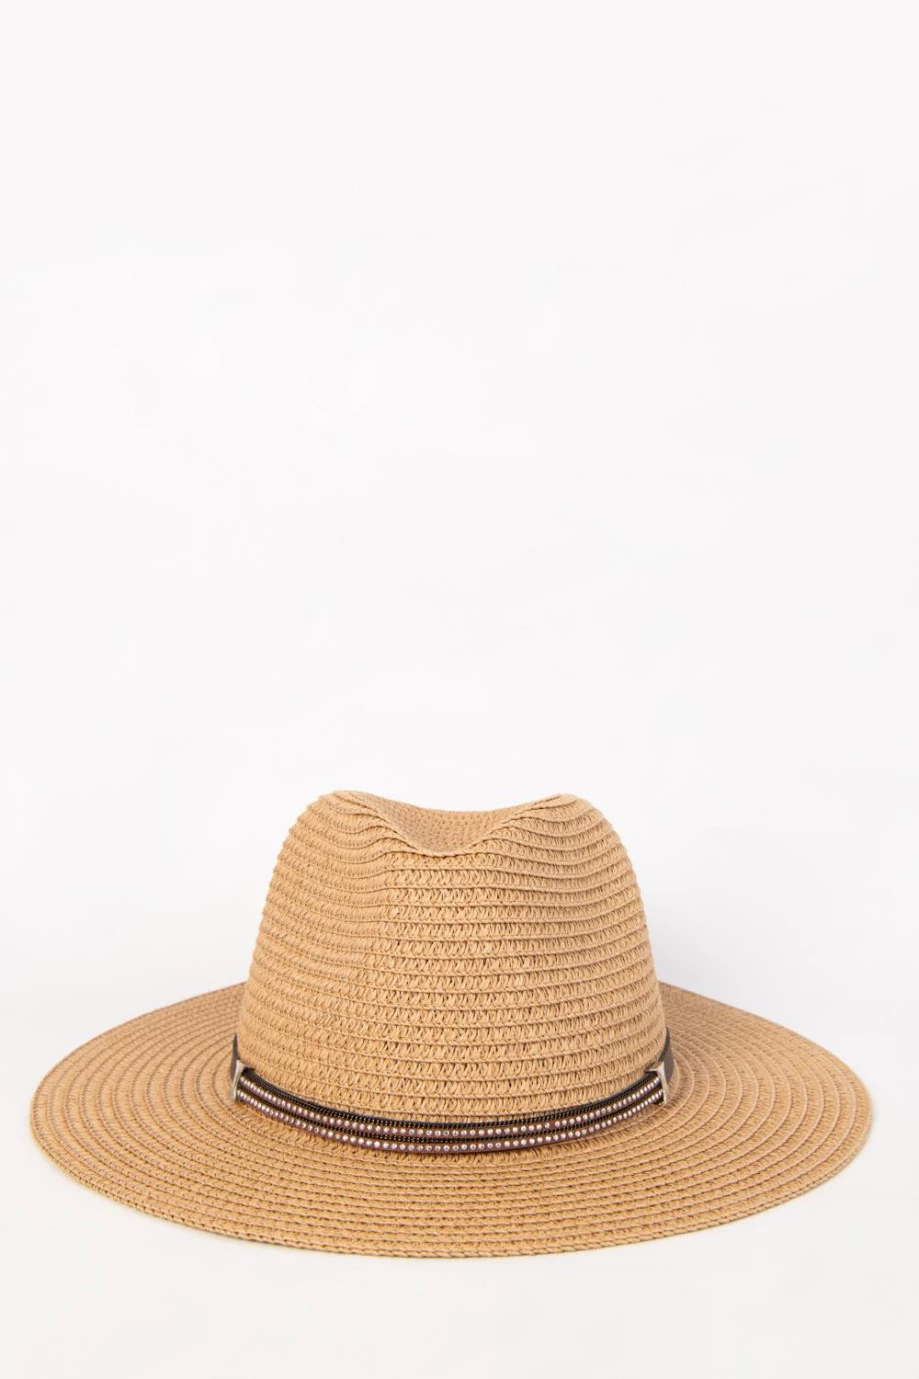 Sombrero kaky claro tejido con ala plana y lazo decorativo